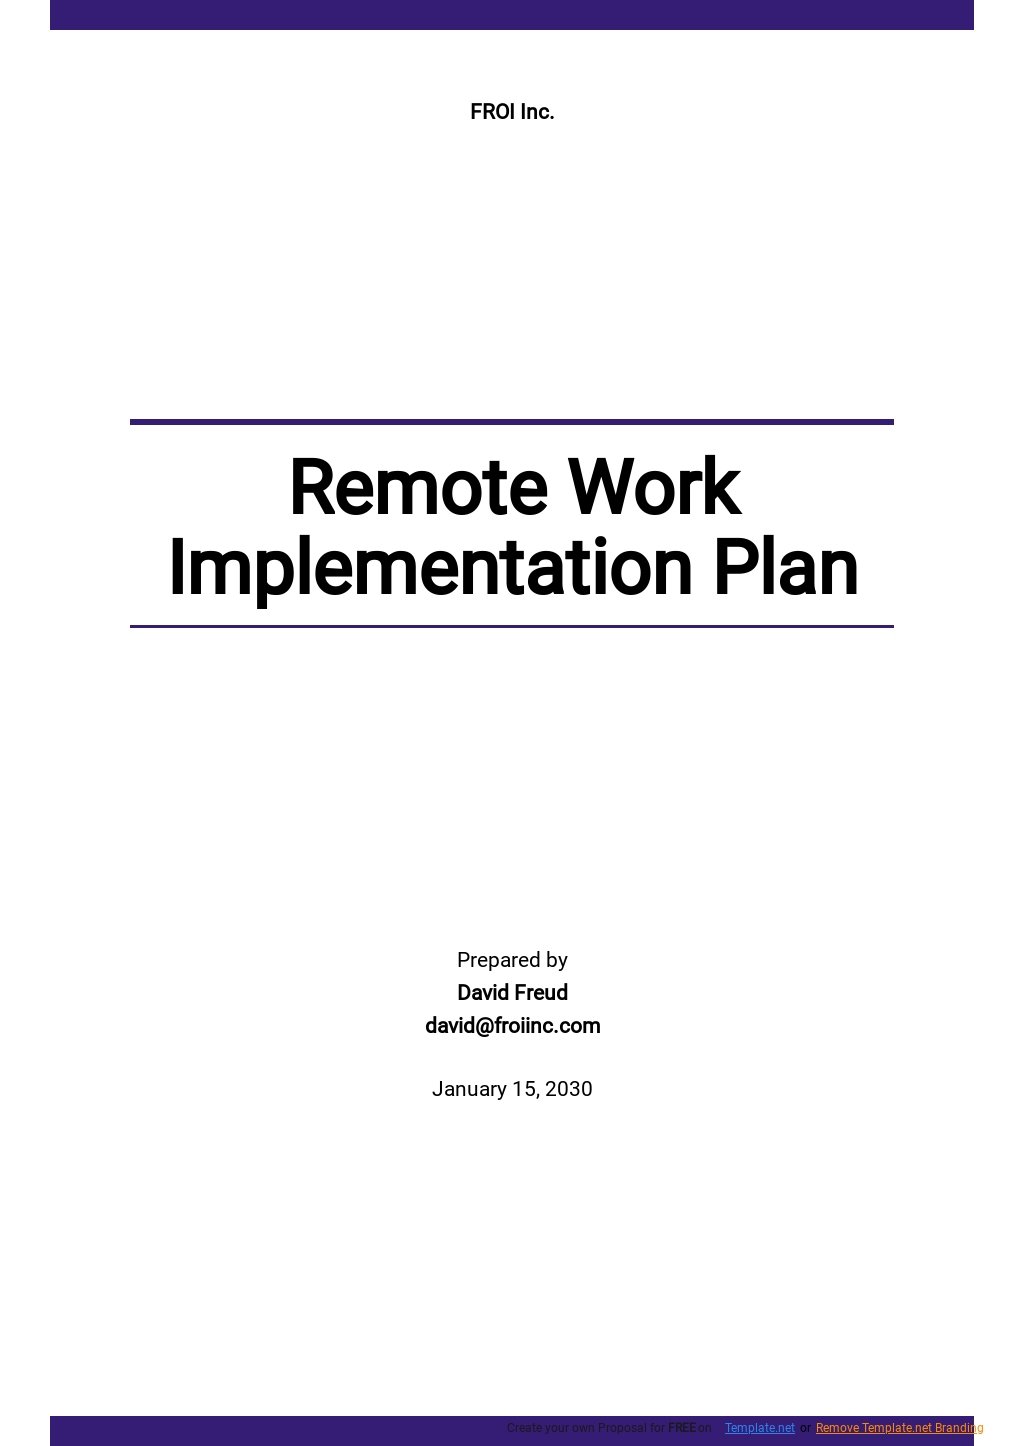 Remote Work Implementation Plan Template.jpe